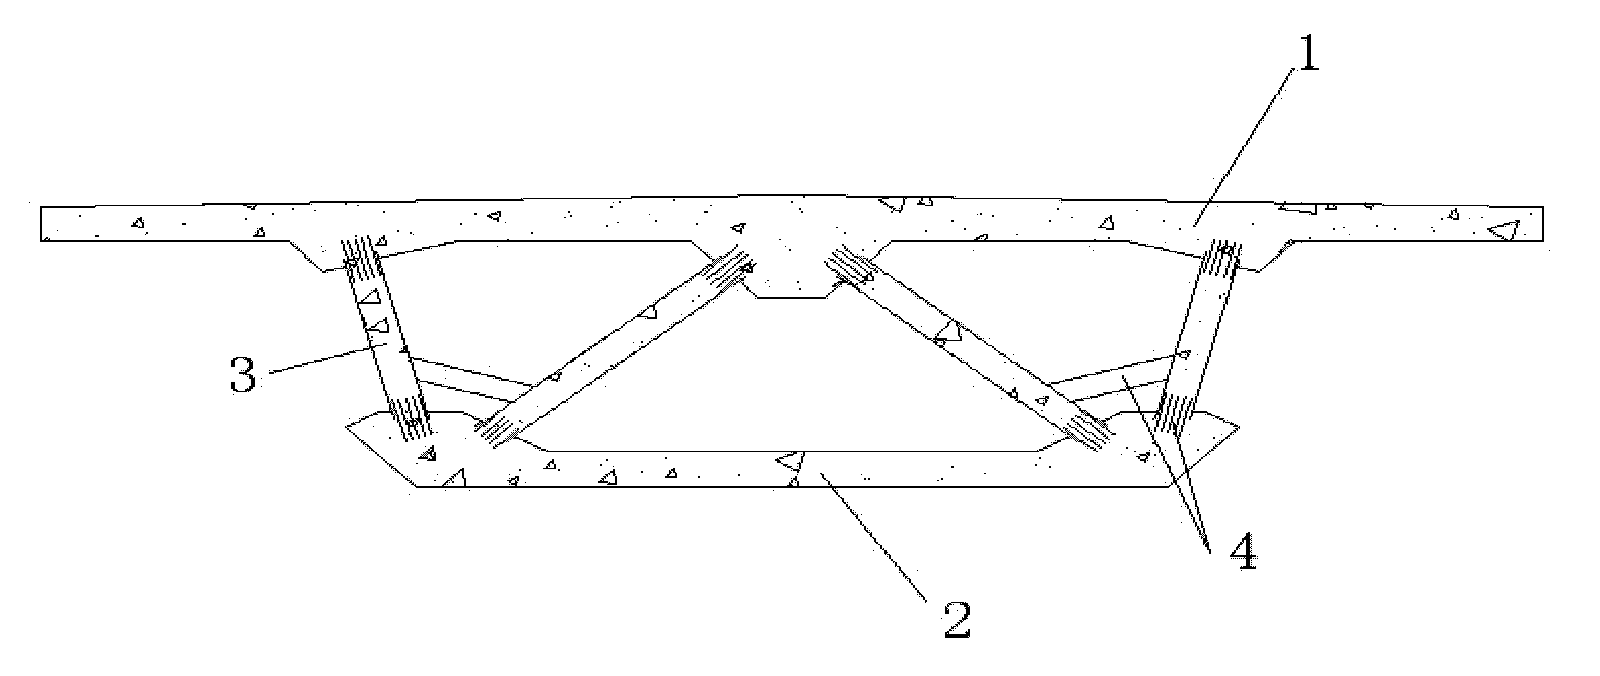 Concrete-filled tube web member combined box girder